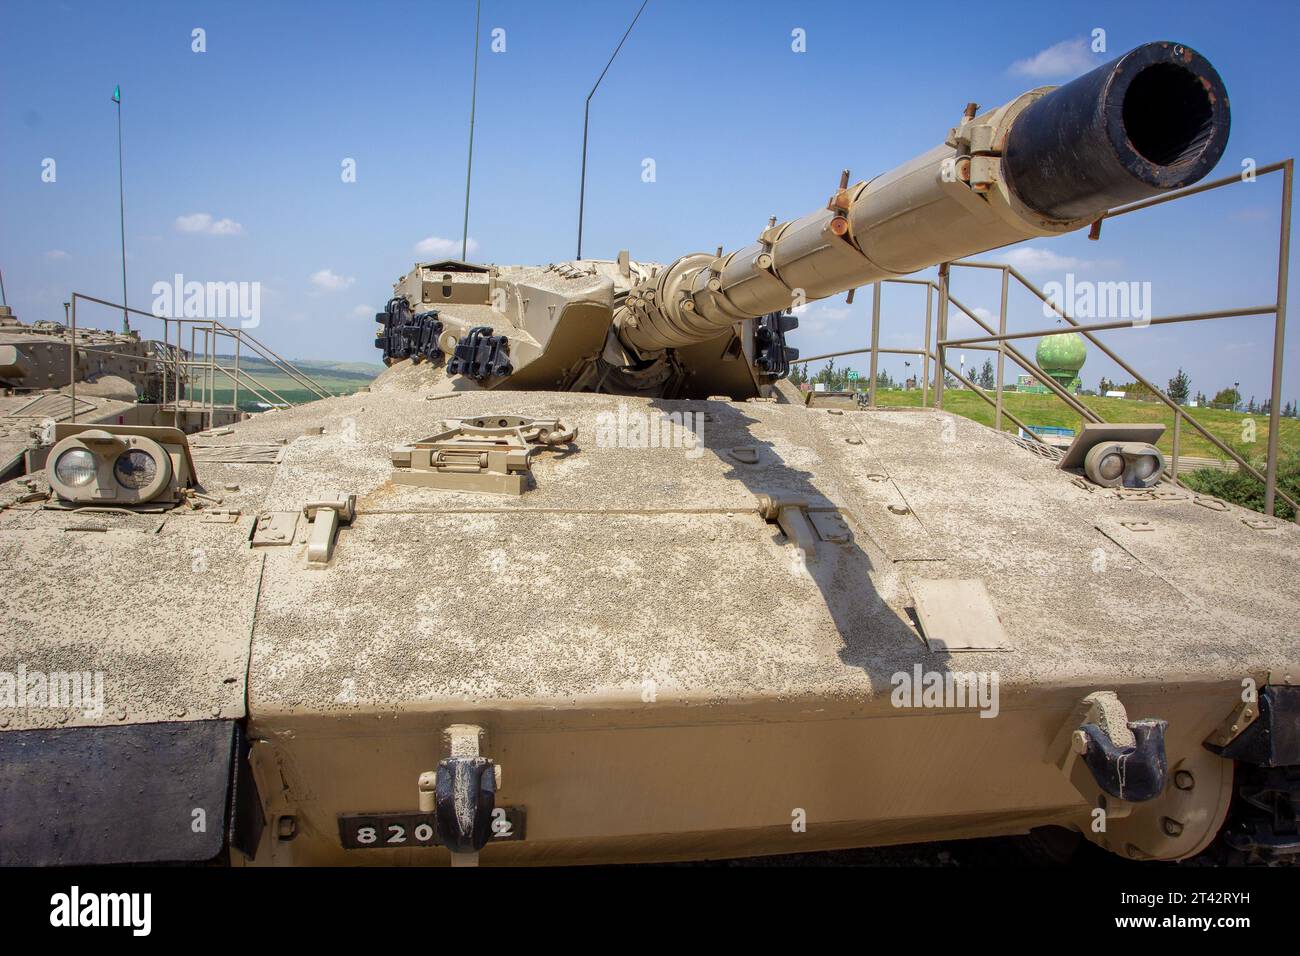 Israeli Merkava tank in Israel Stock Photo